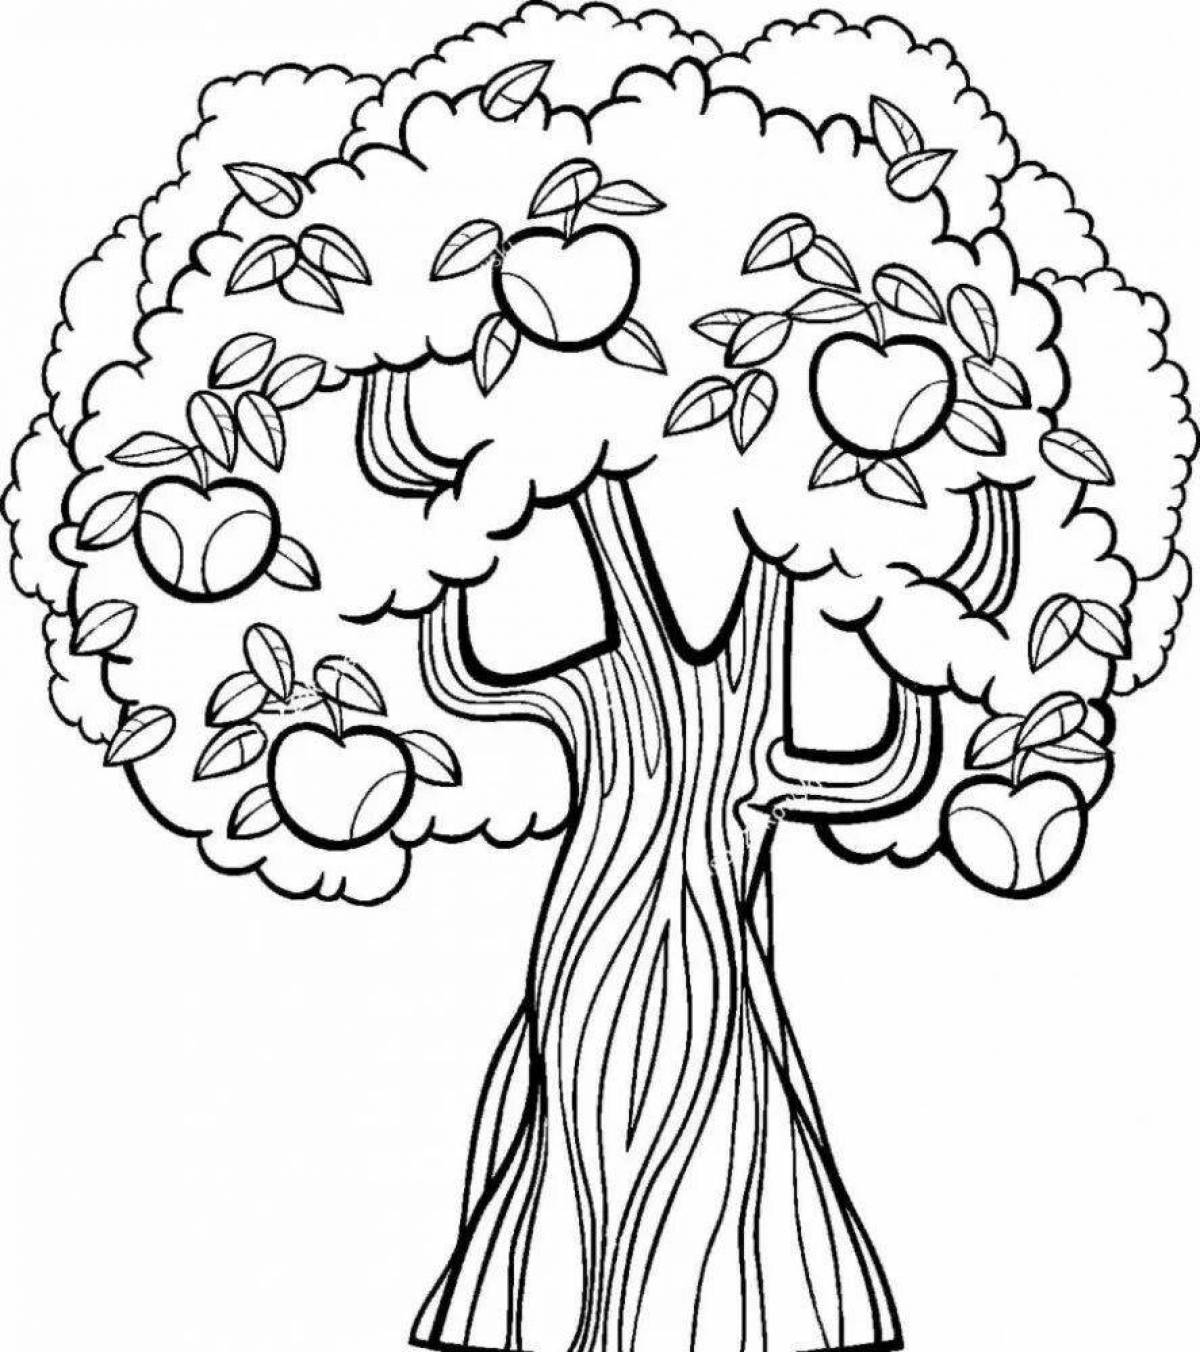 Brilliant apple tree for babies